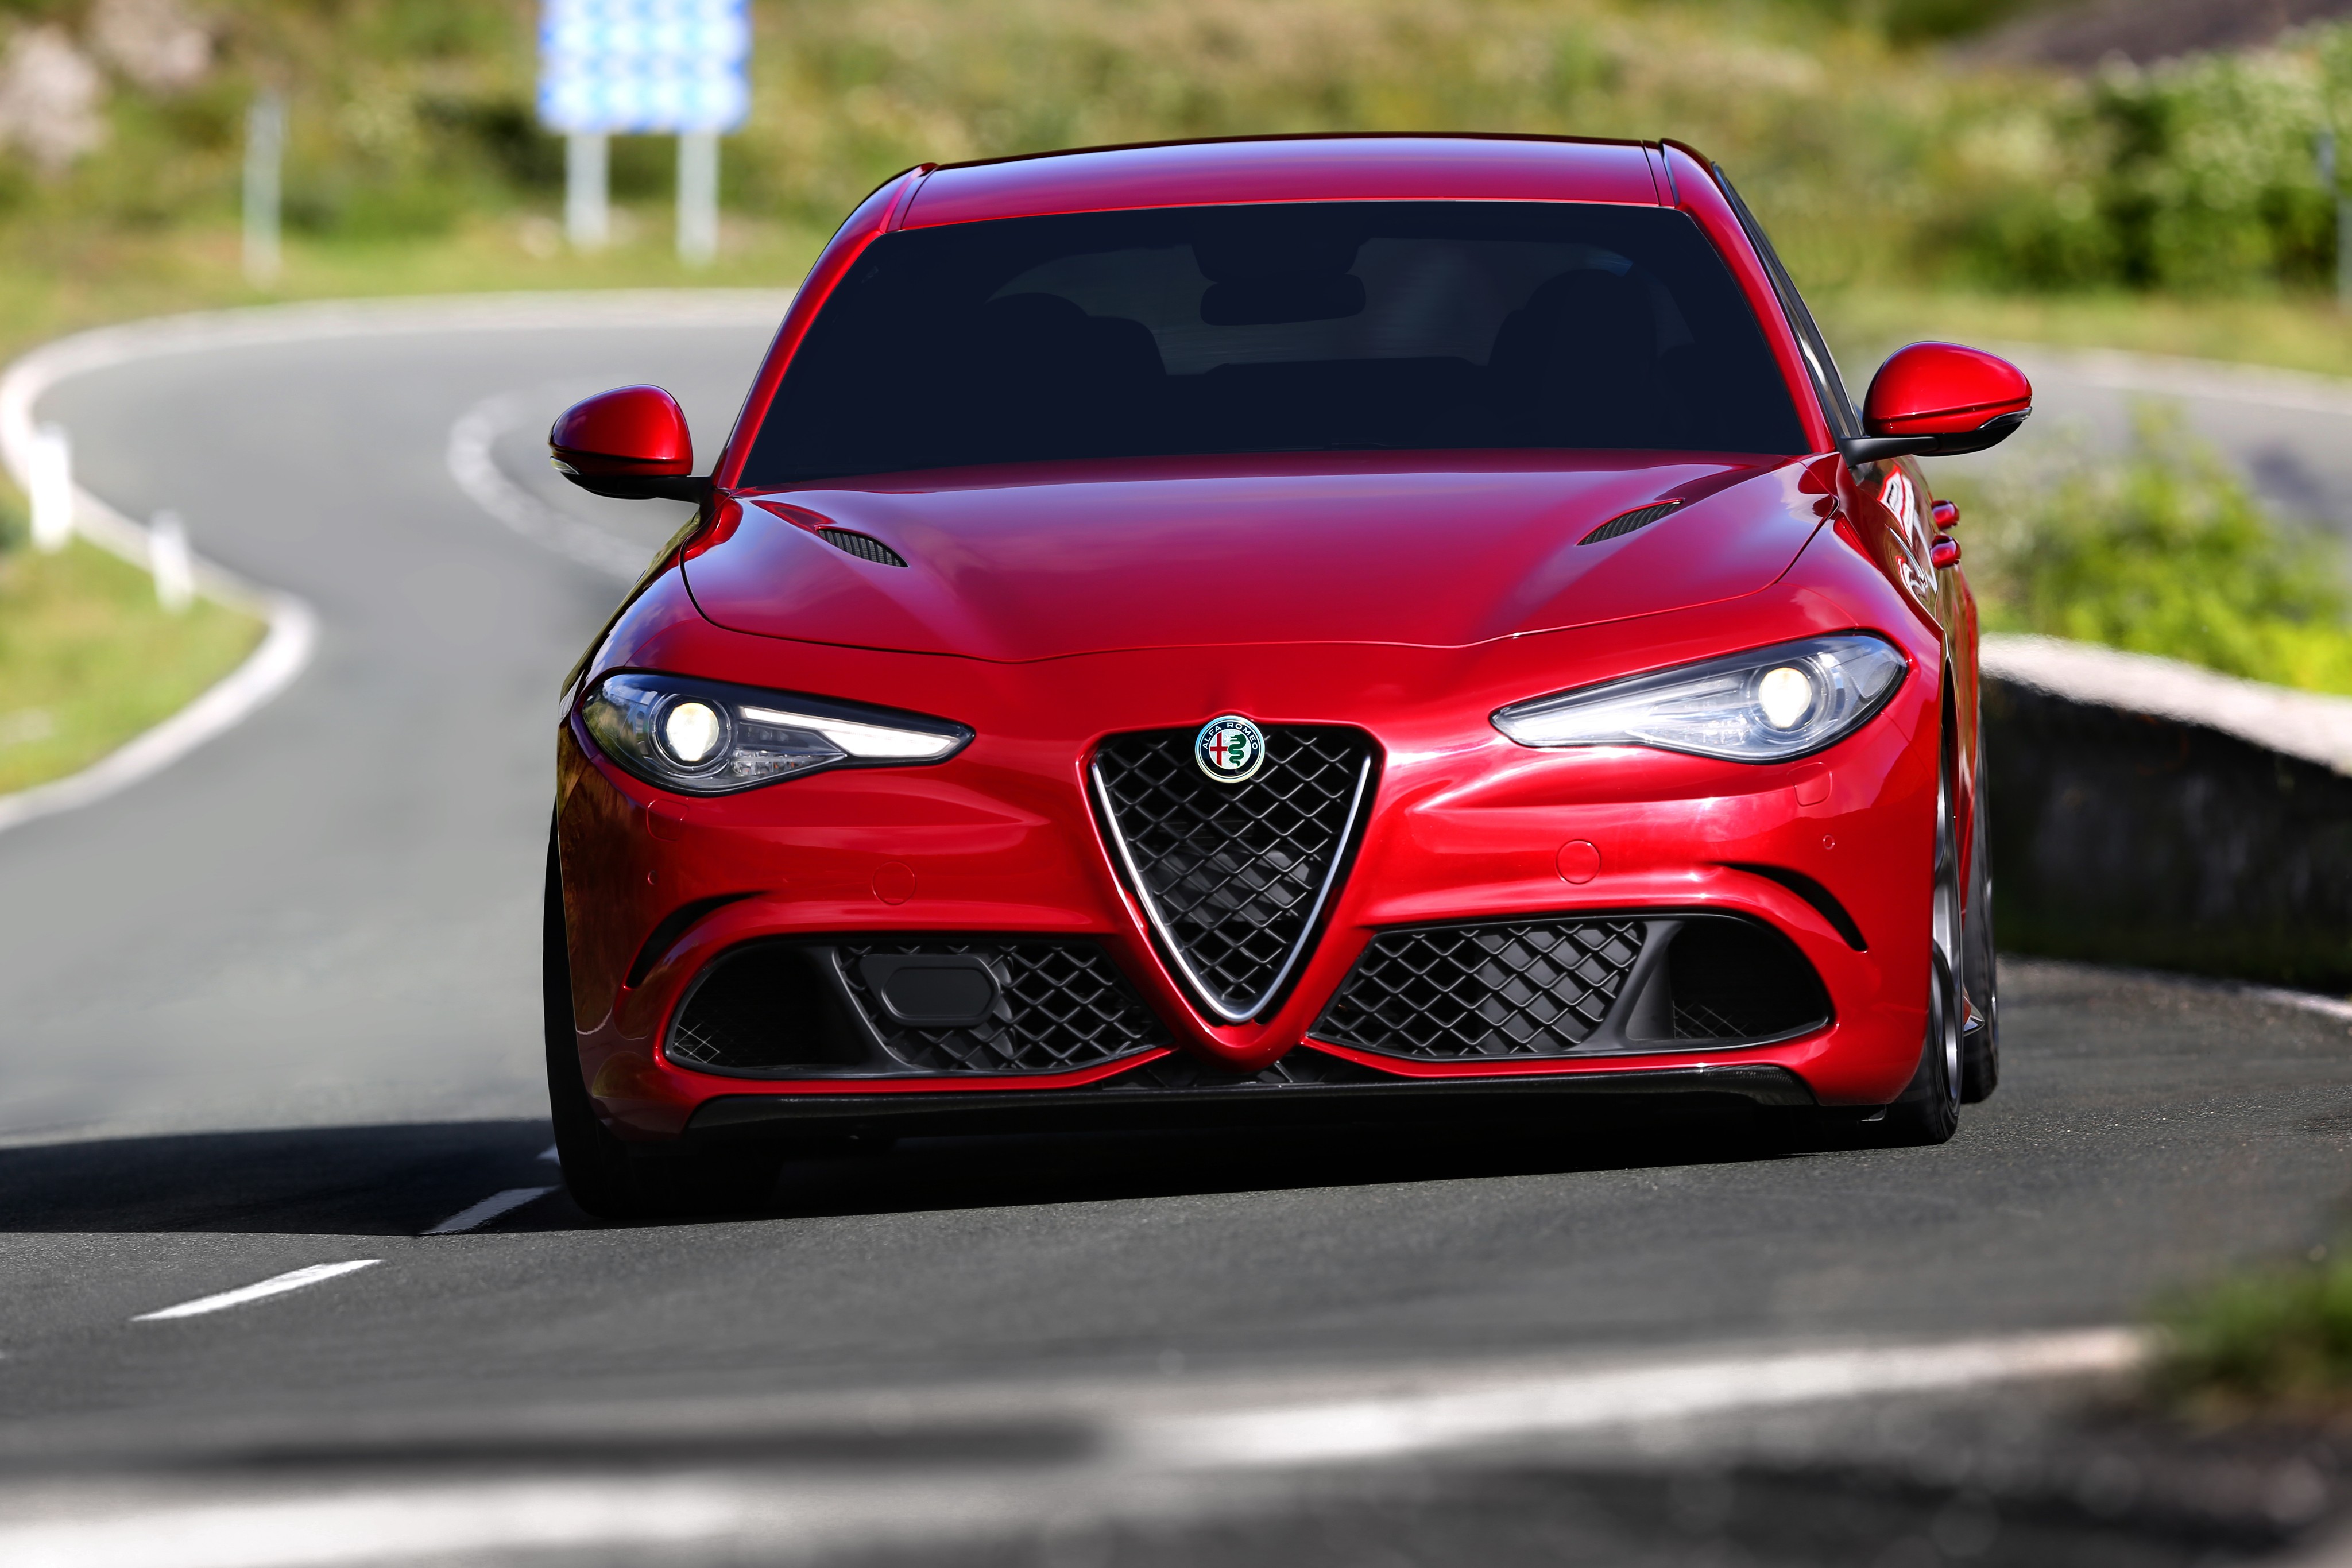 Alfa Romeo Giulietta modern specifications